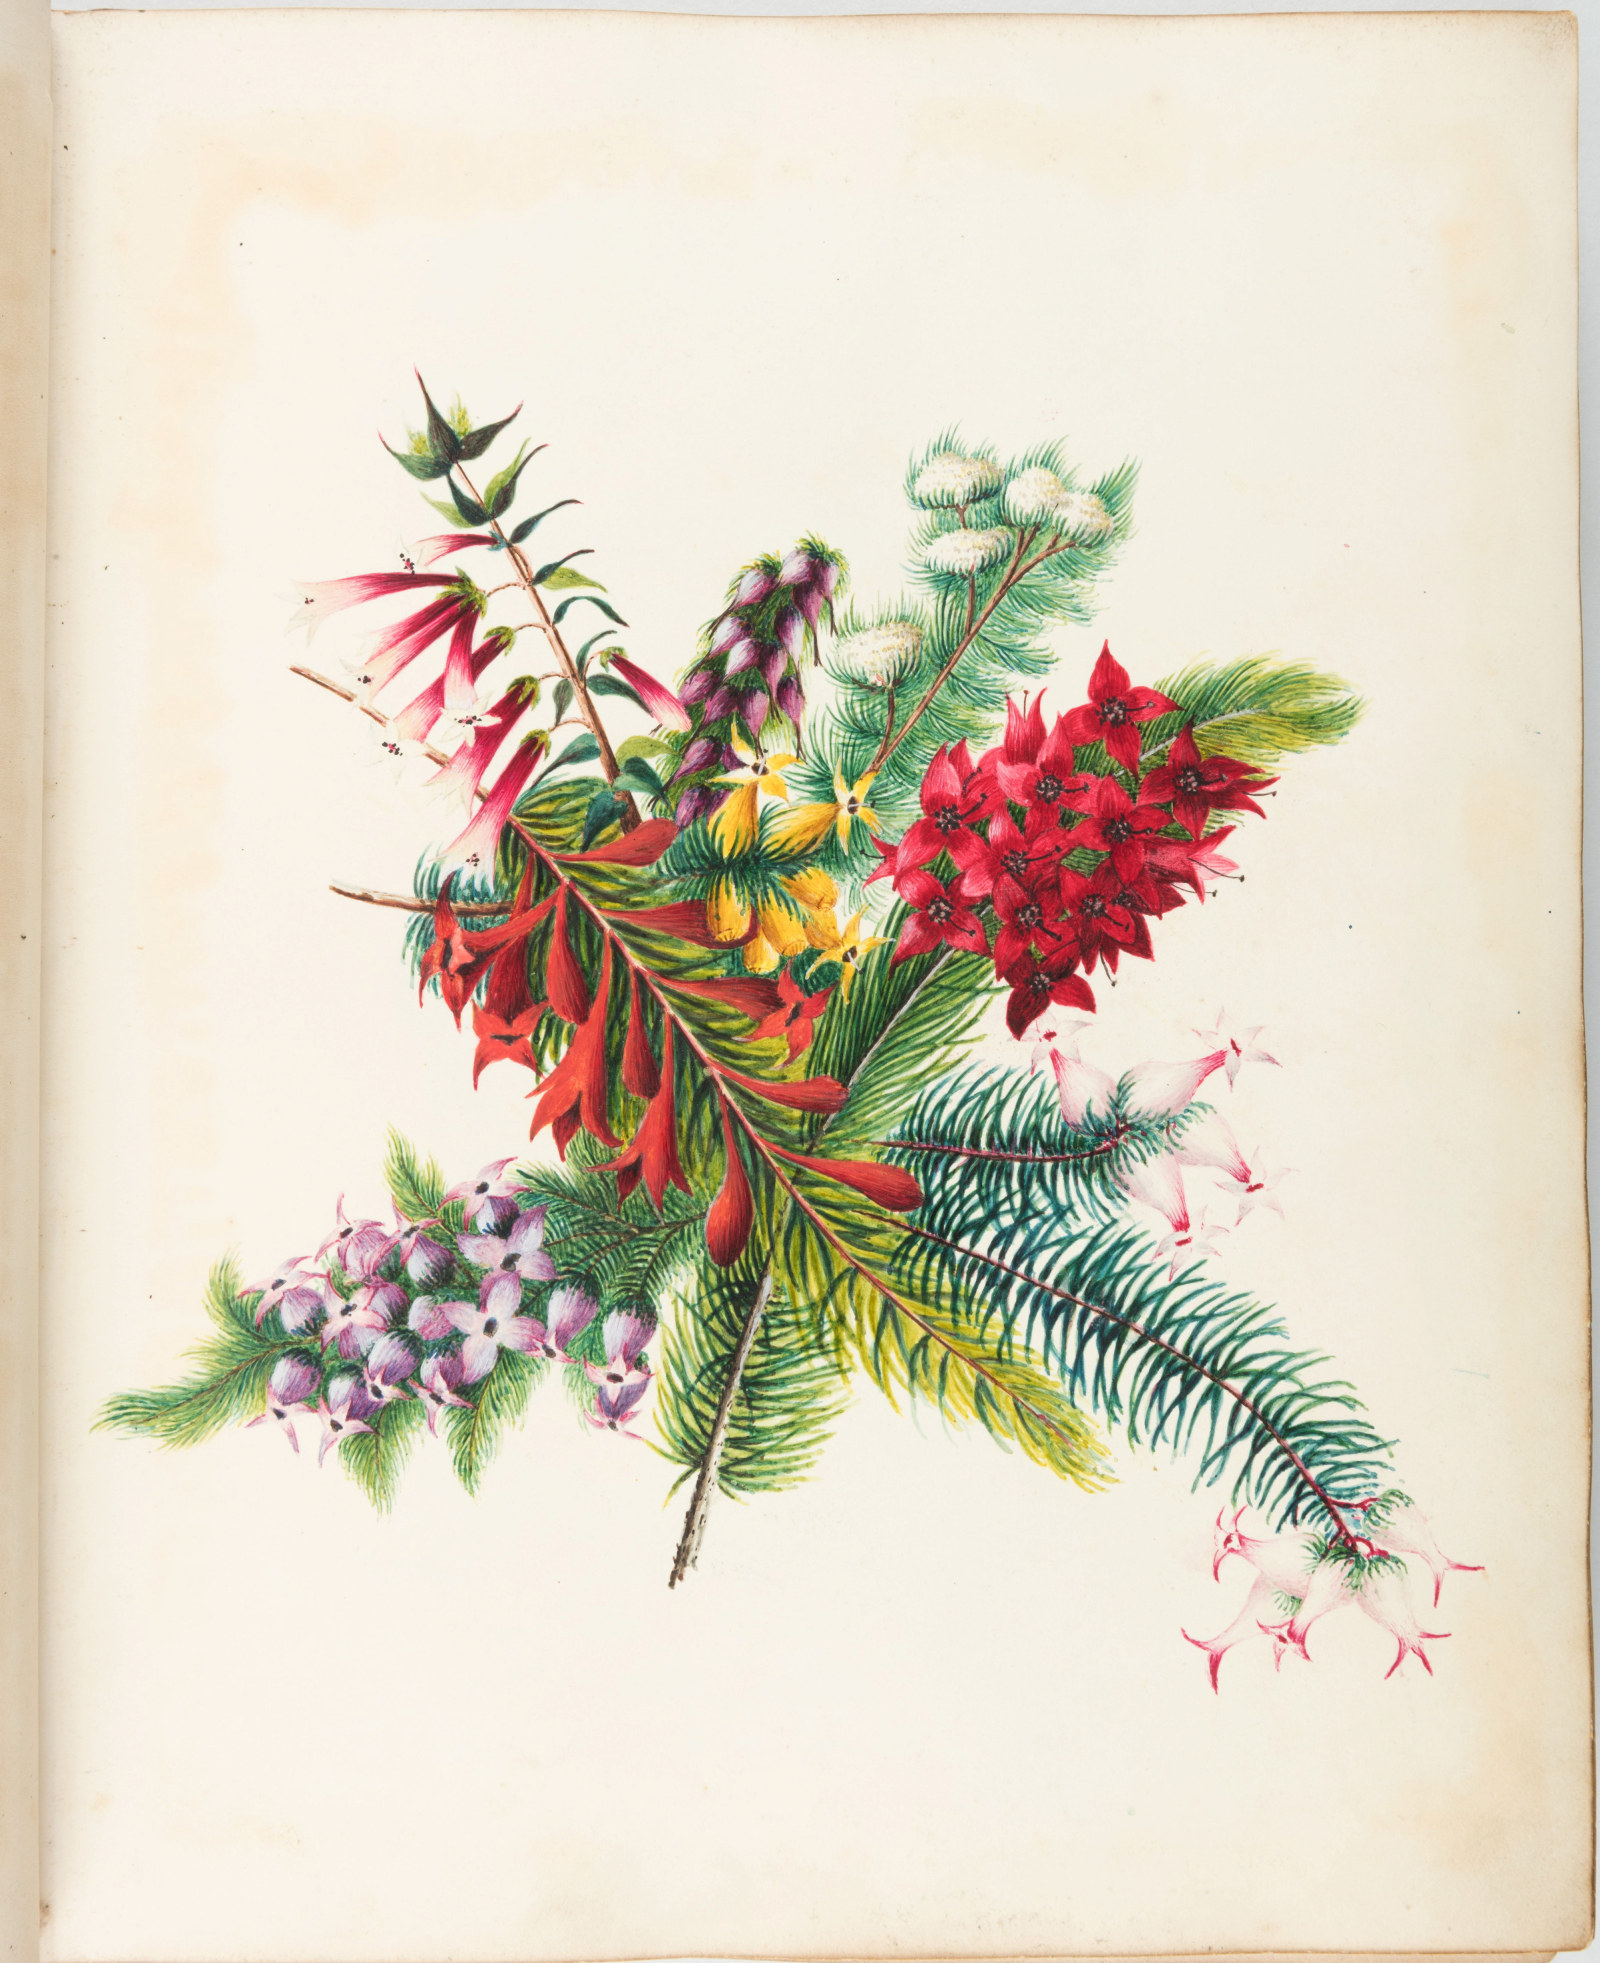 Illustration of a bouquet of Australian native flowers